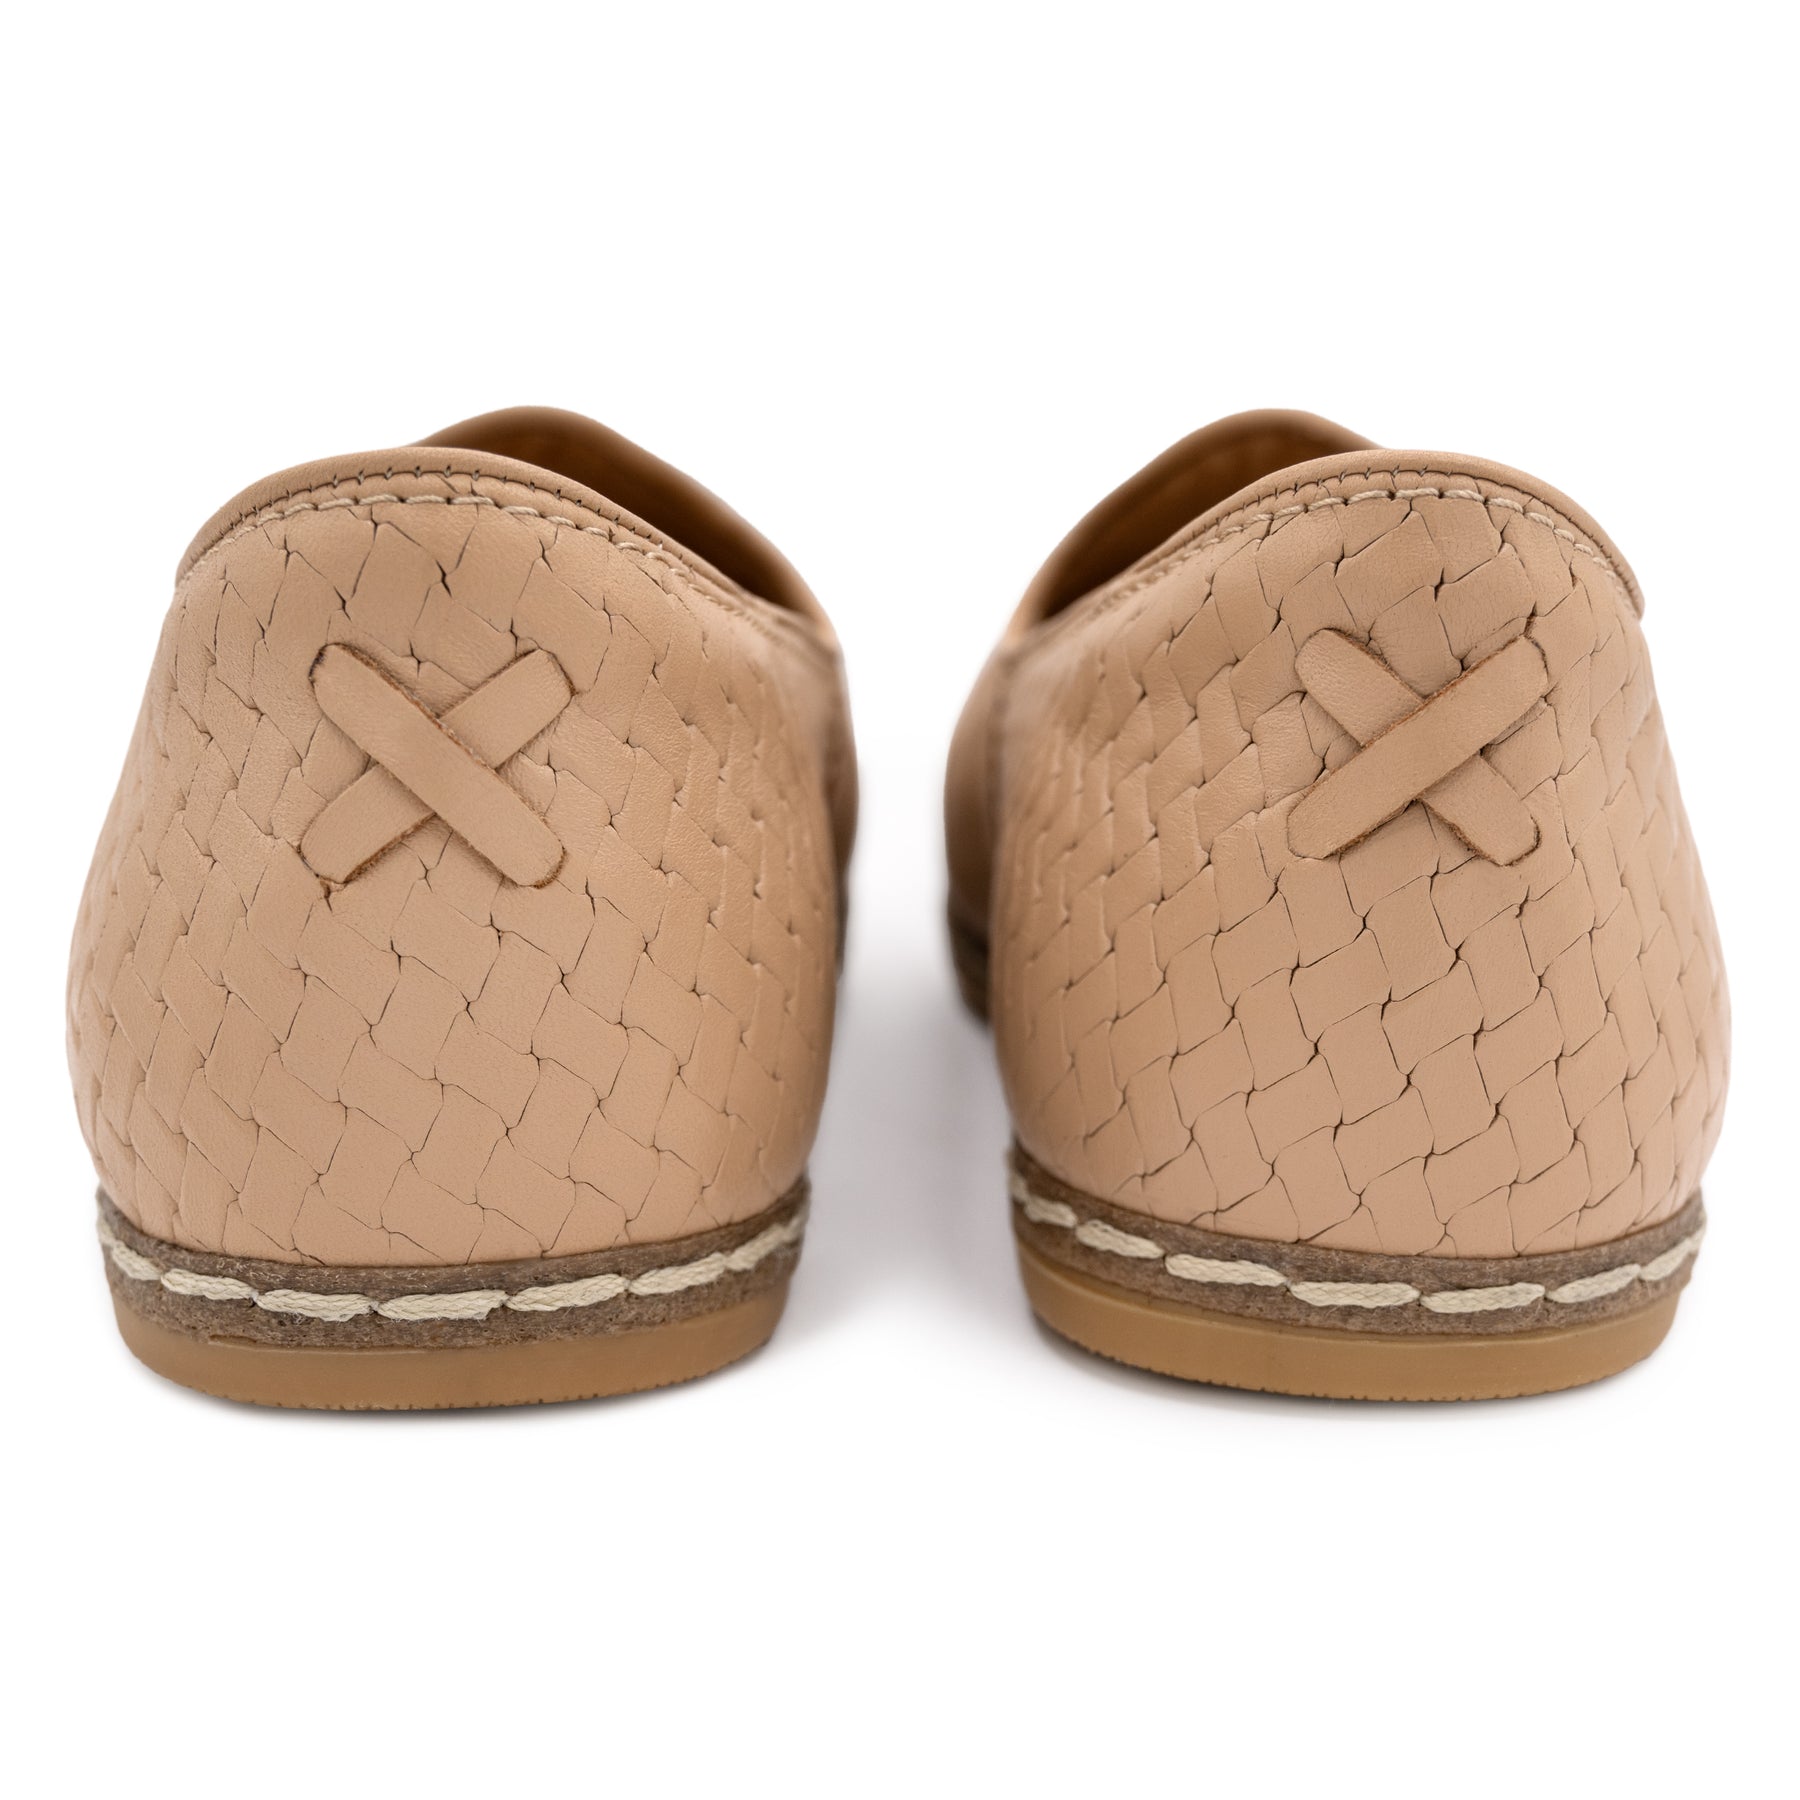 Woven Tan - Charix Shoes